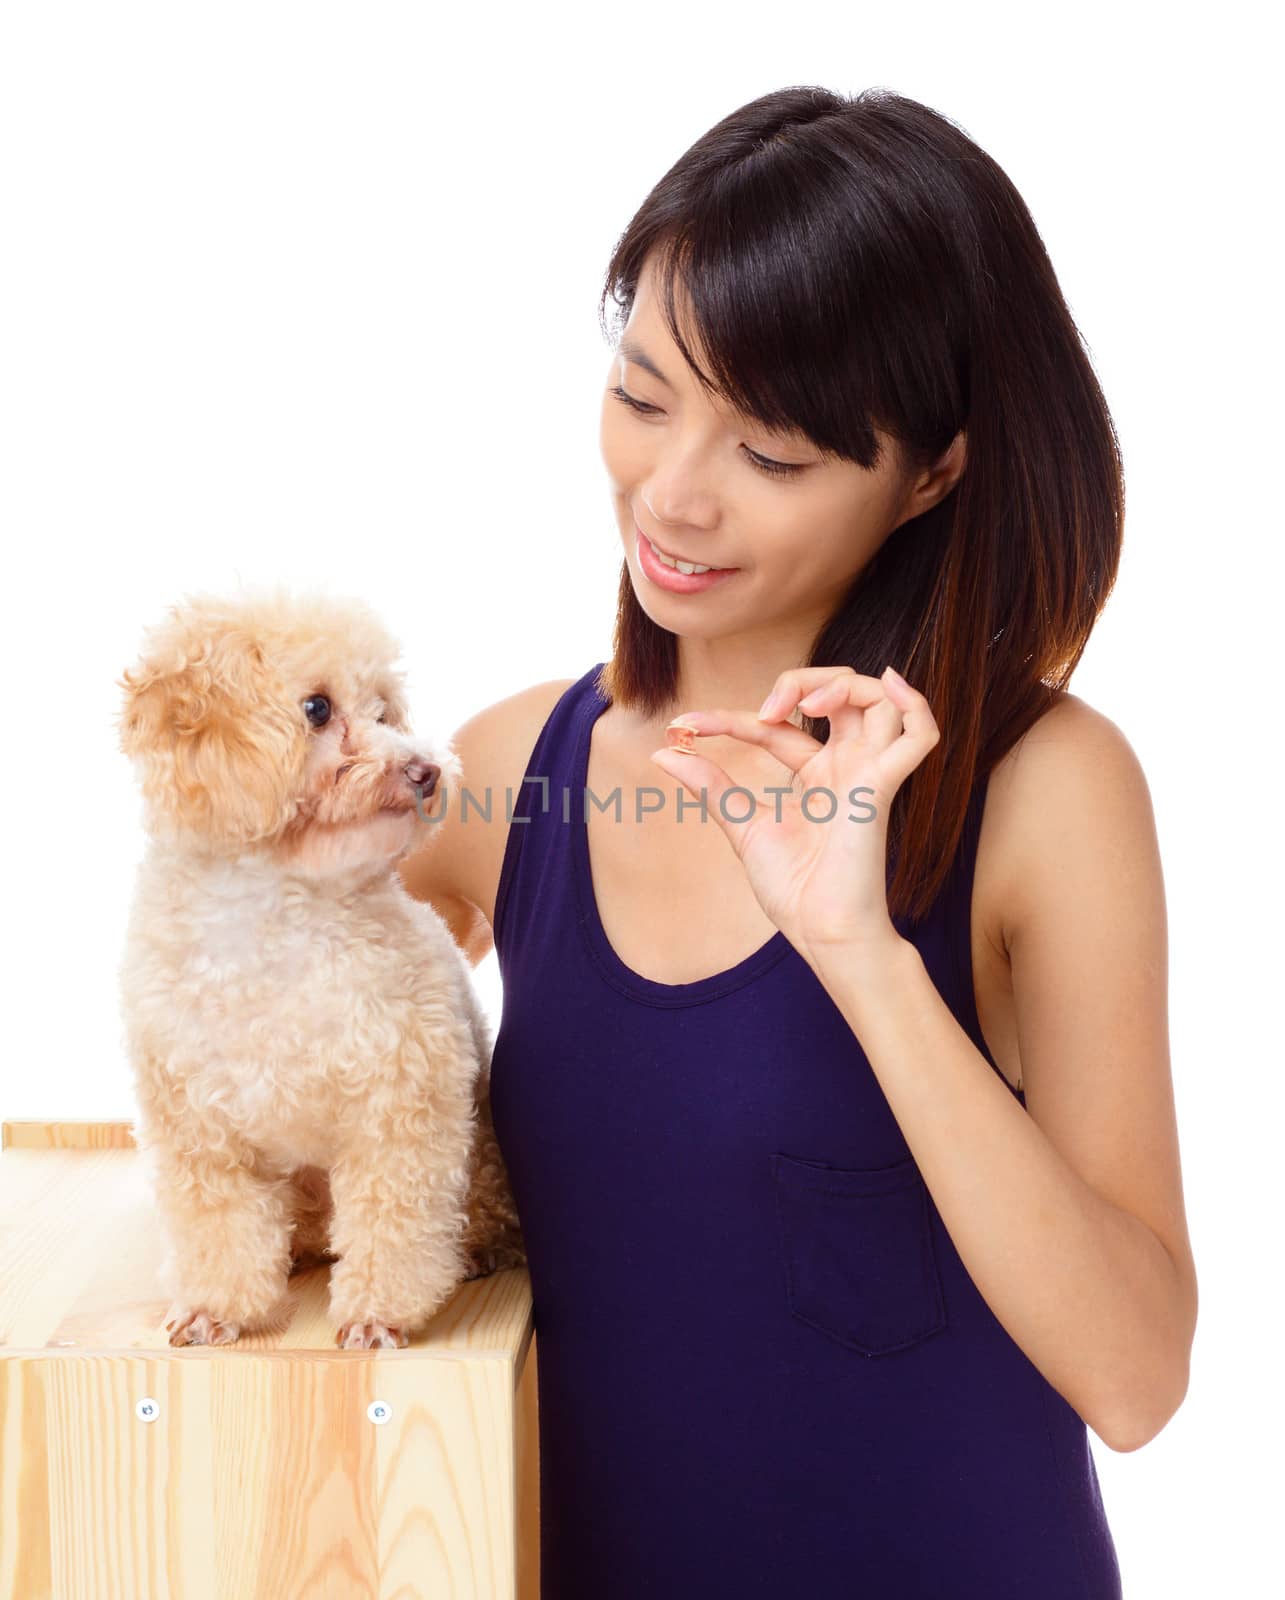 Asian woman feeding poodle by leungchopan